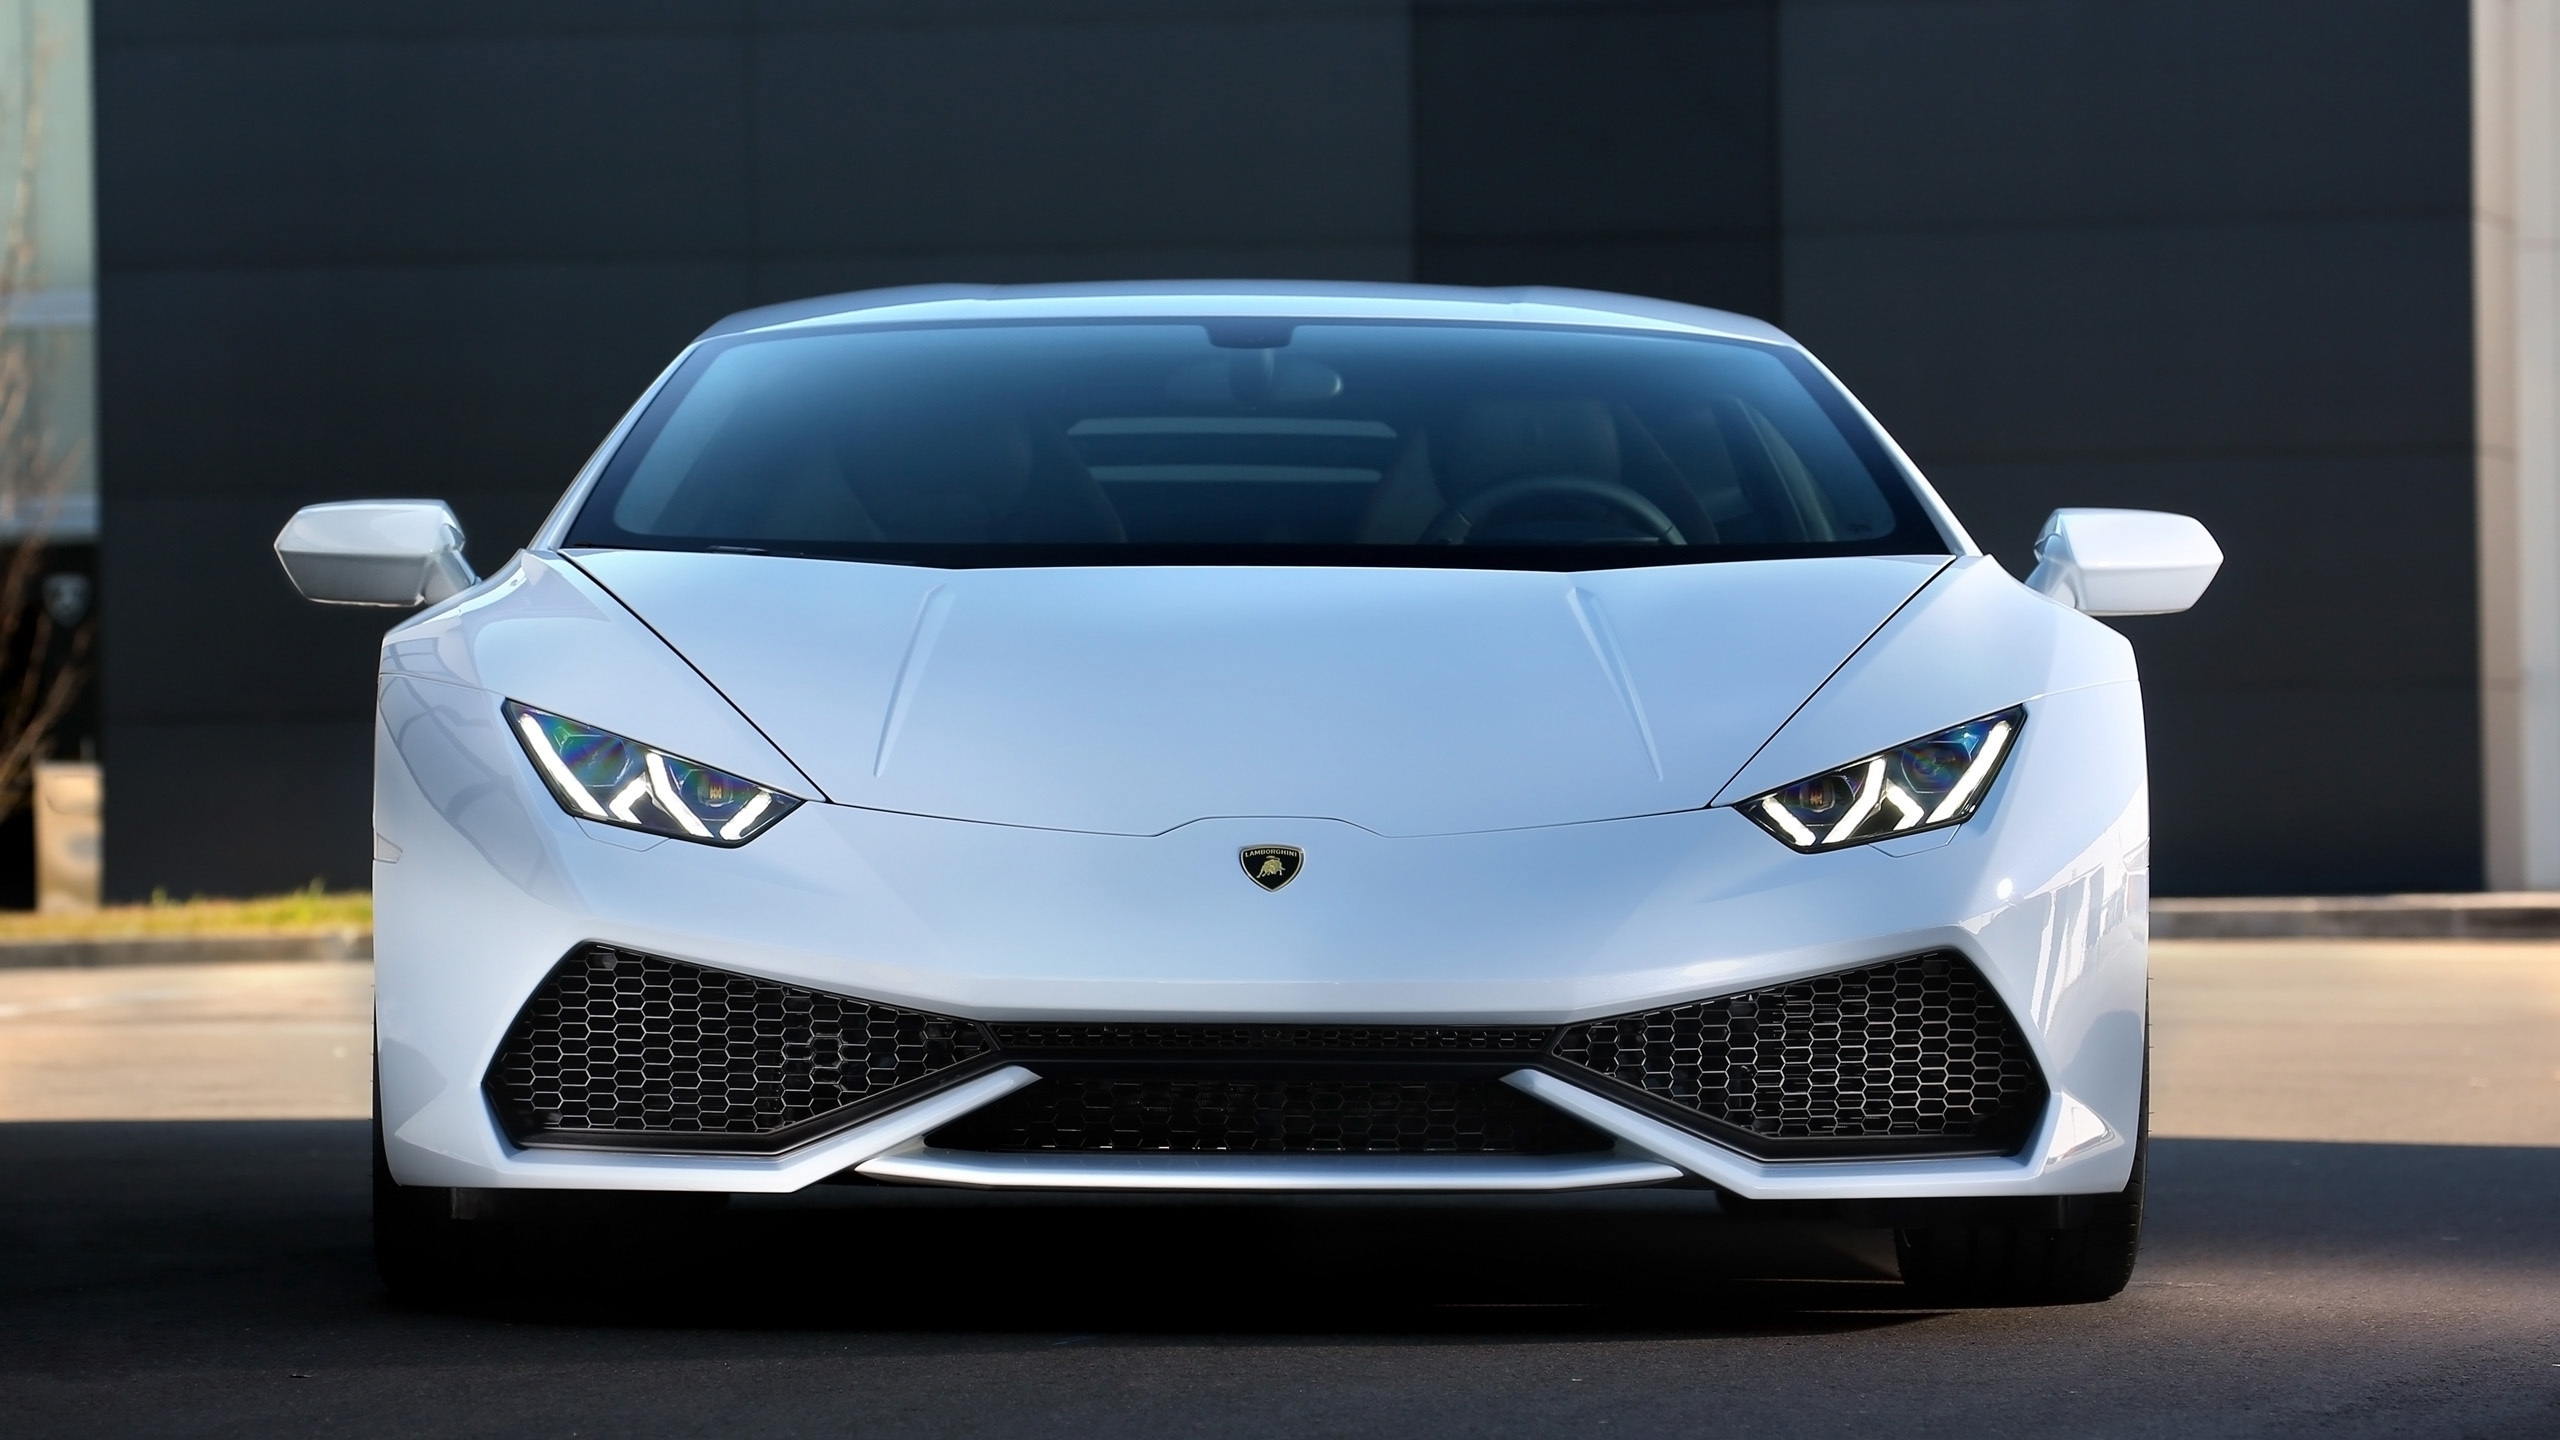 Lamborghini Huracan Front for 2560x1440 HDTV resolution